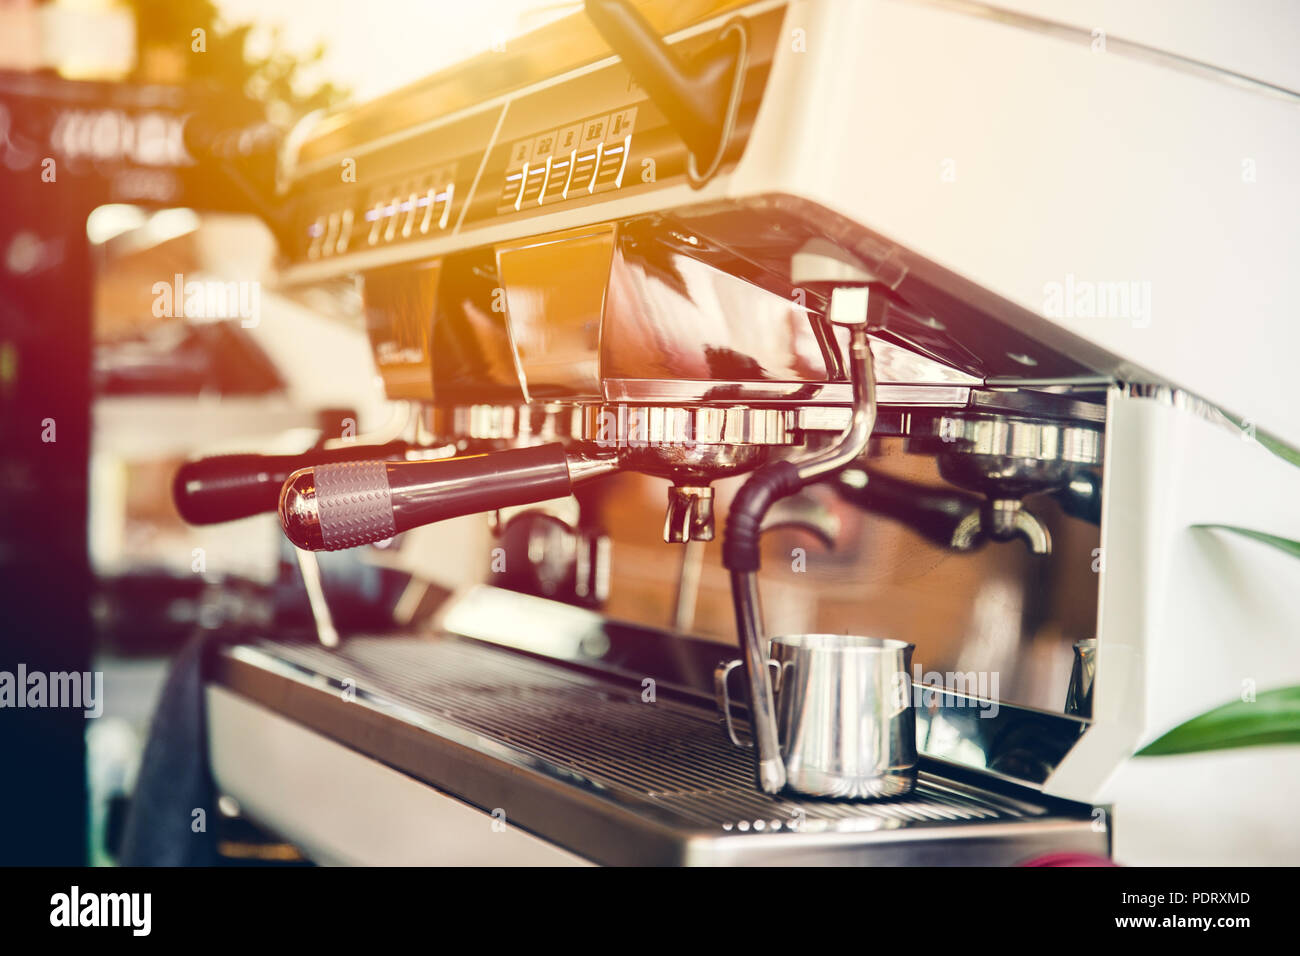 Coffee machine, Espresso maker for Barista modern lifestyle in Cafe Stock Photo